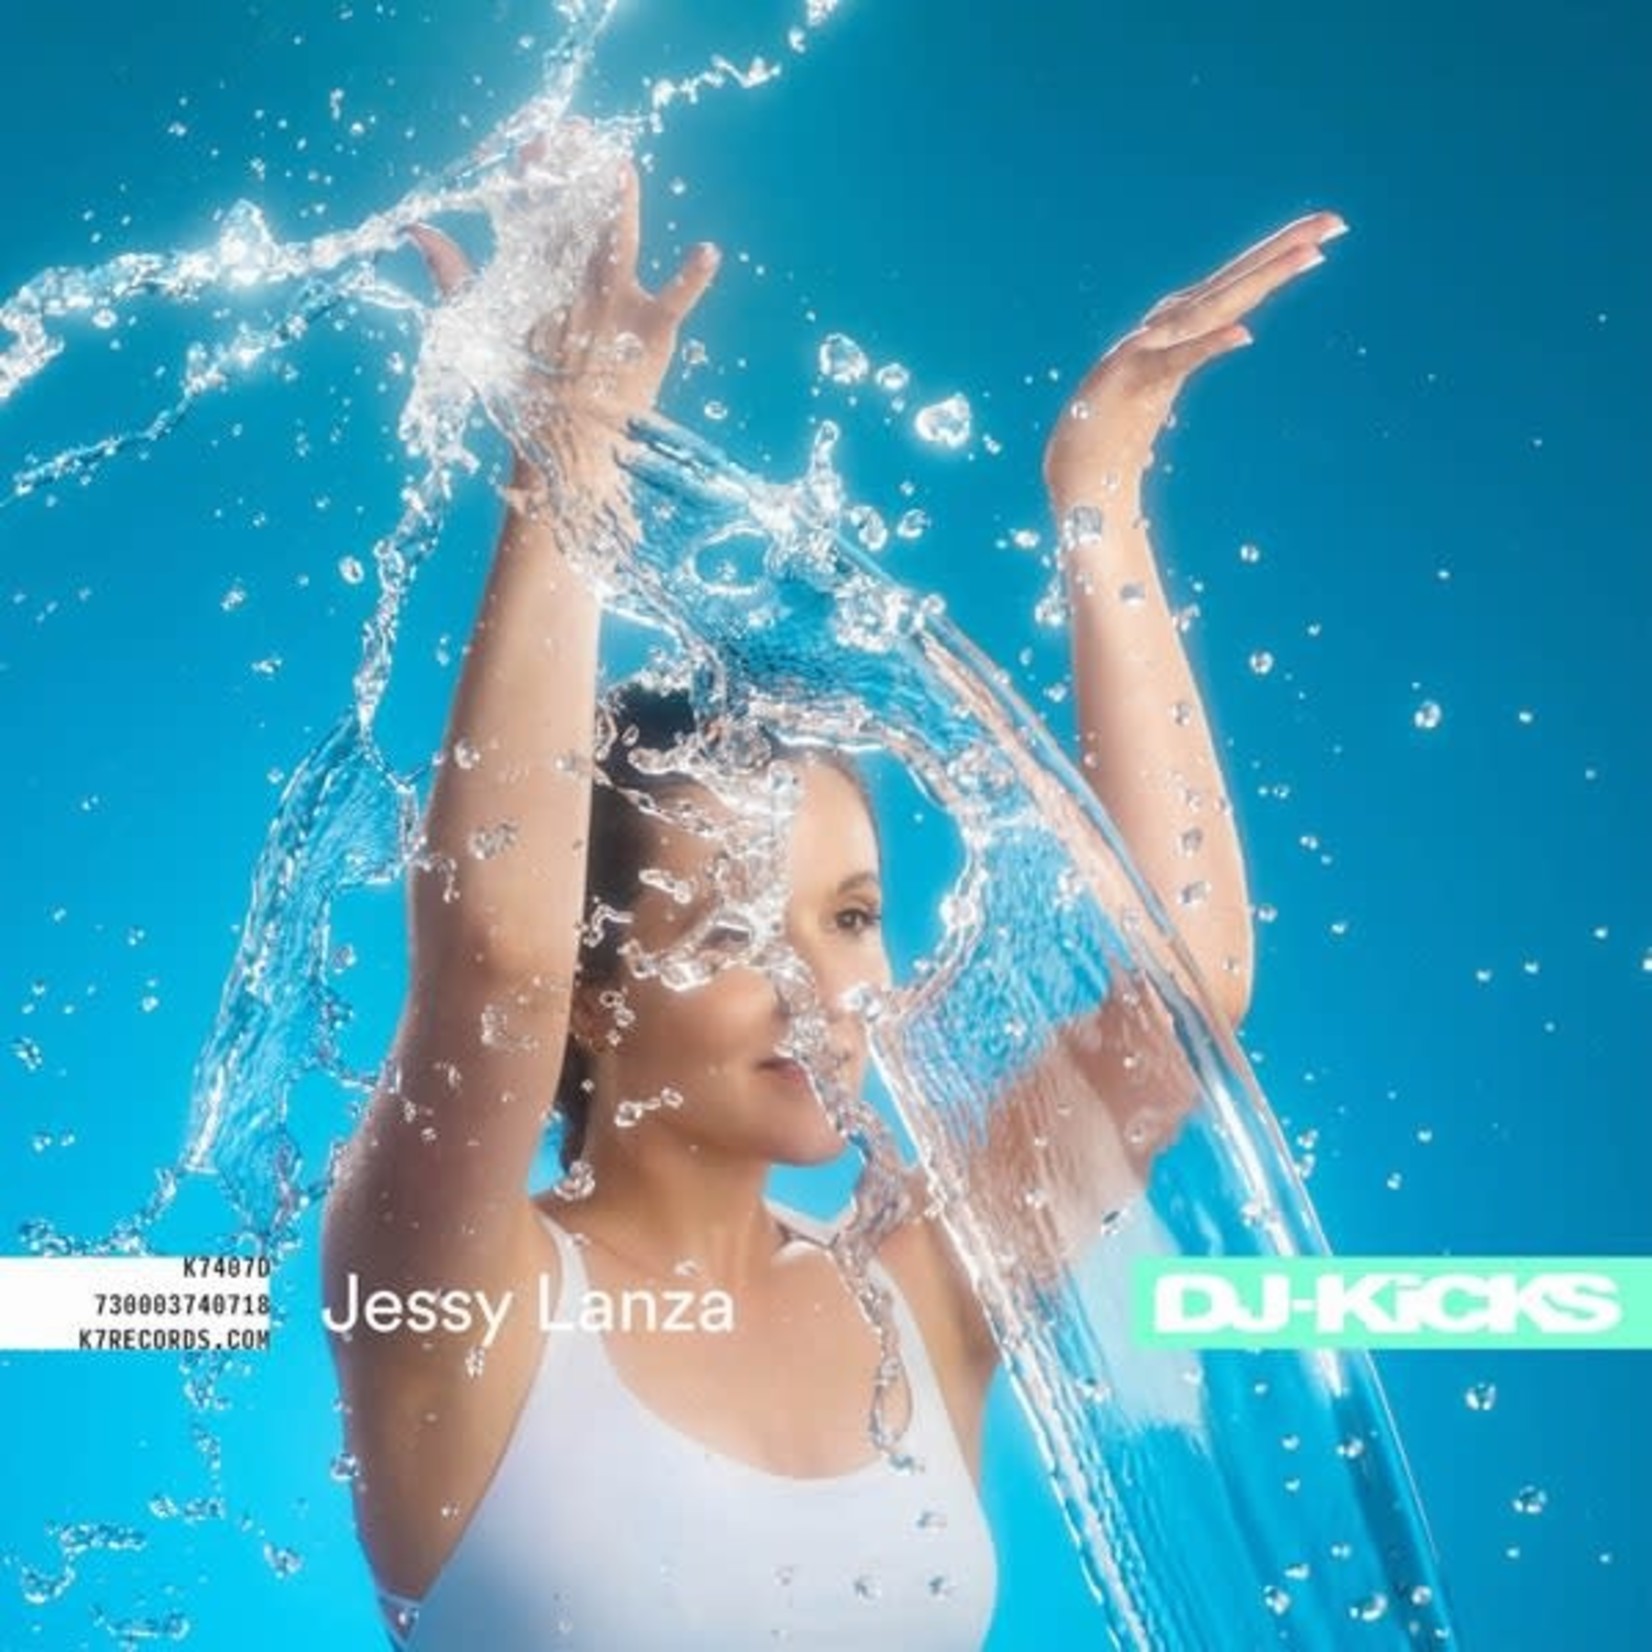 [New] Jessy Lanza - Dj-Kicks: Jessy Lanza